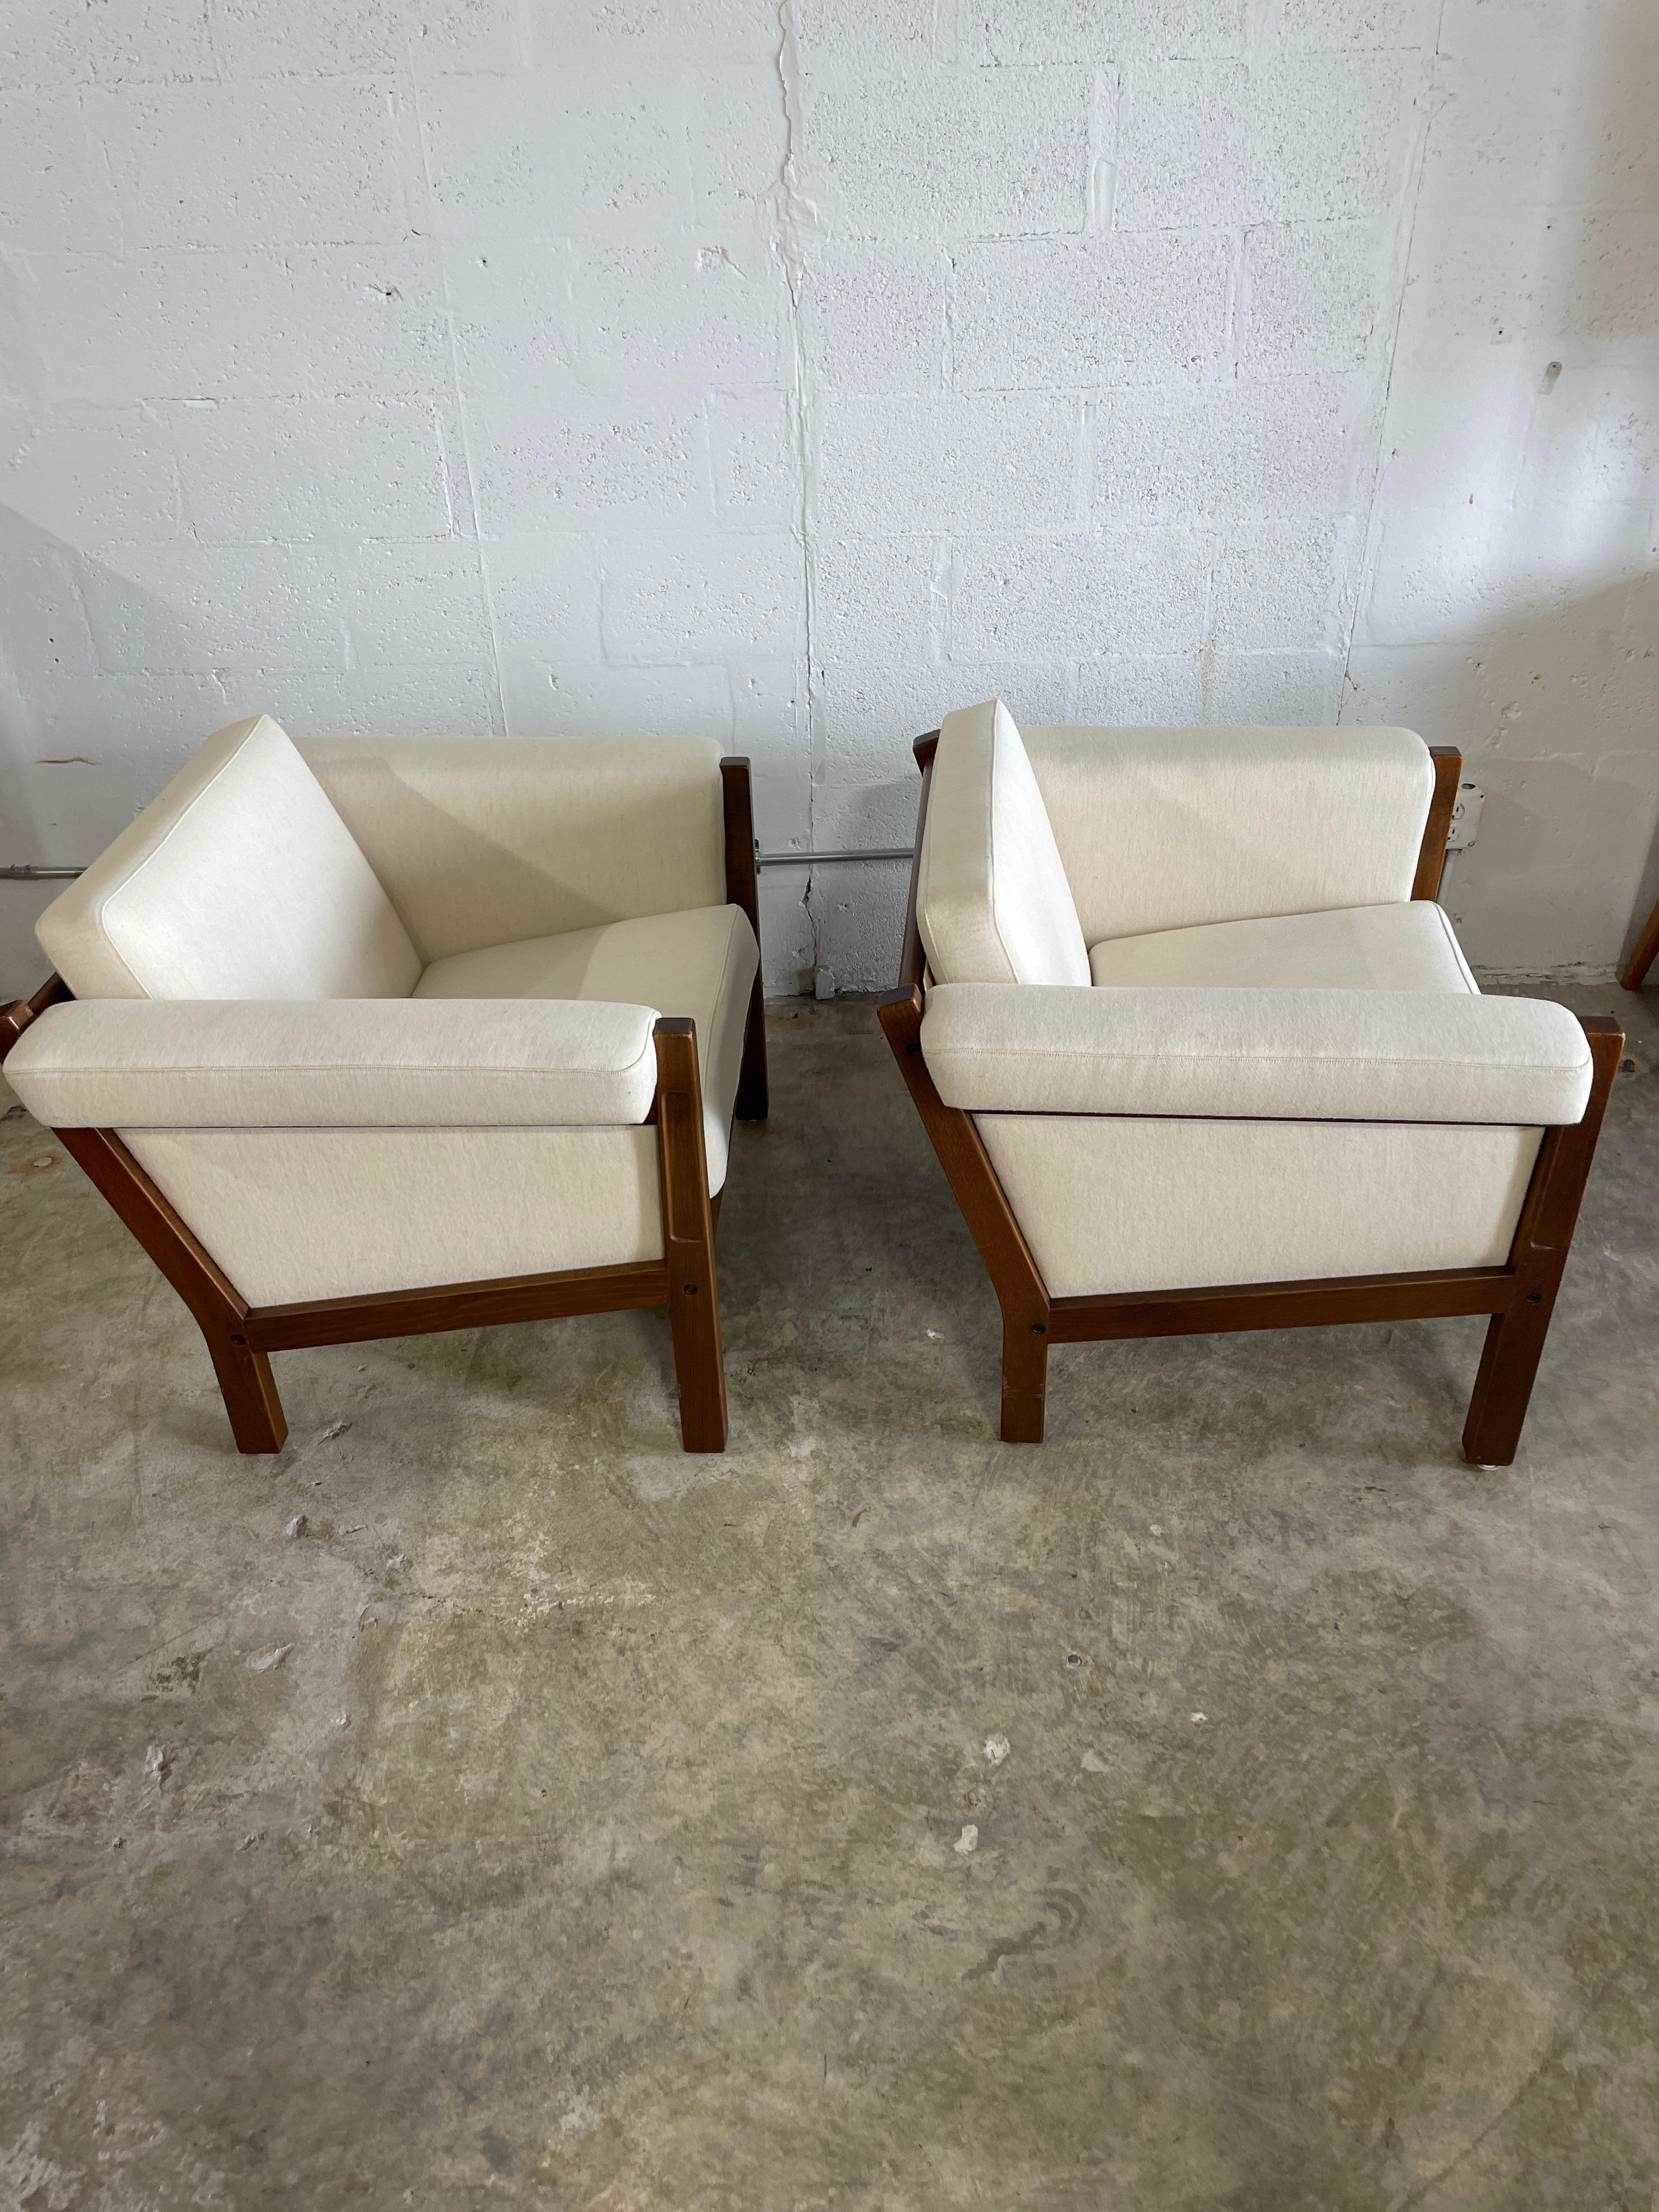 Hans Wegner Ge40 Getama Danish Modern of Lounge Chairs - a Pair For Sale 2